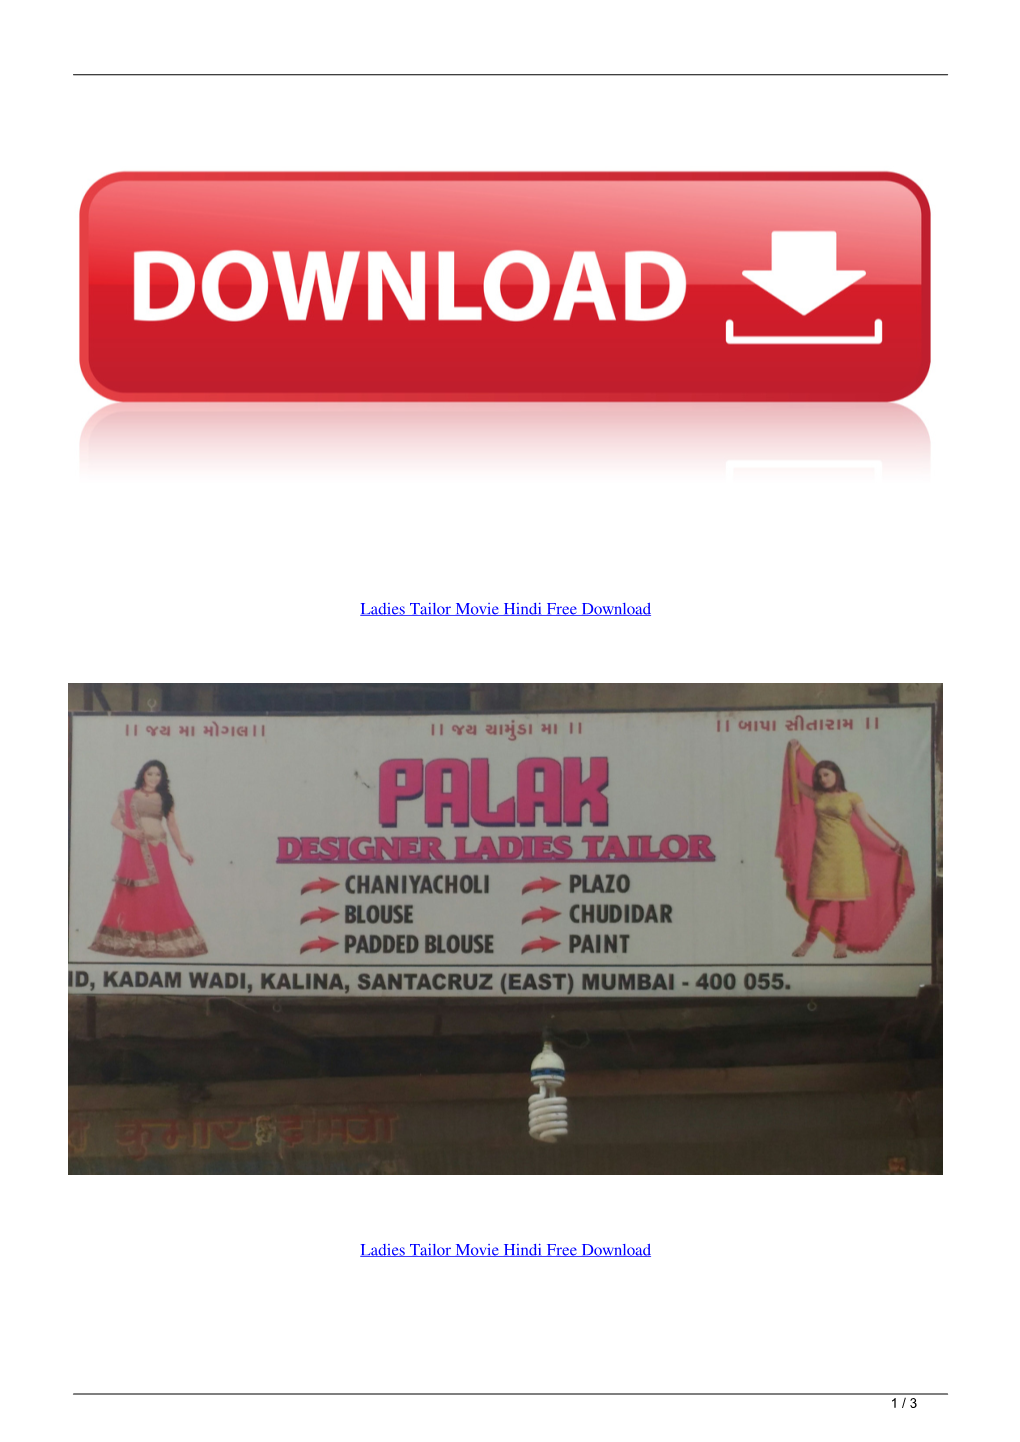 Ladies Tailor Movie Hindi Free Download